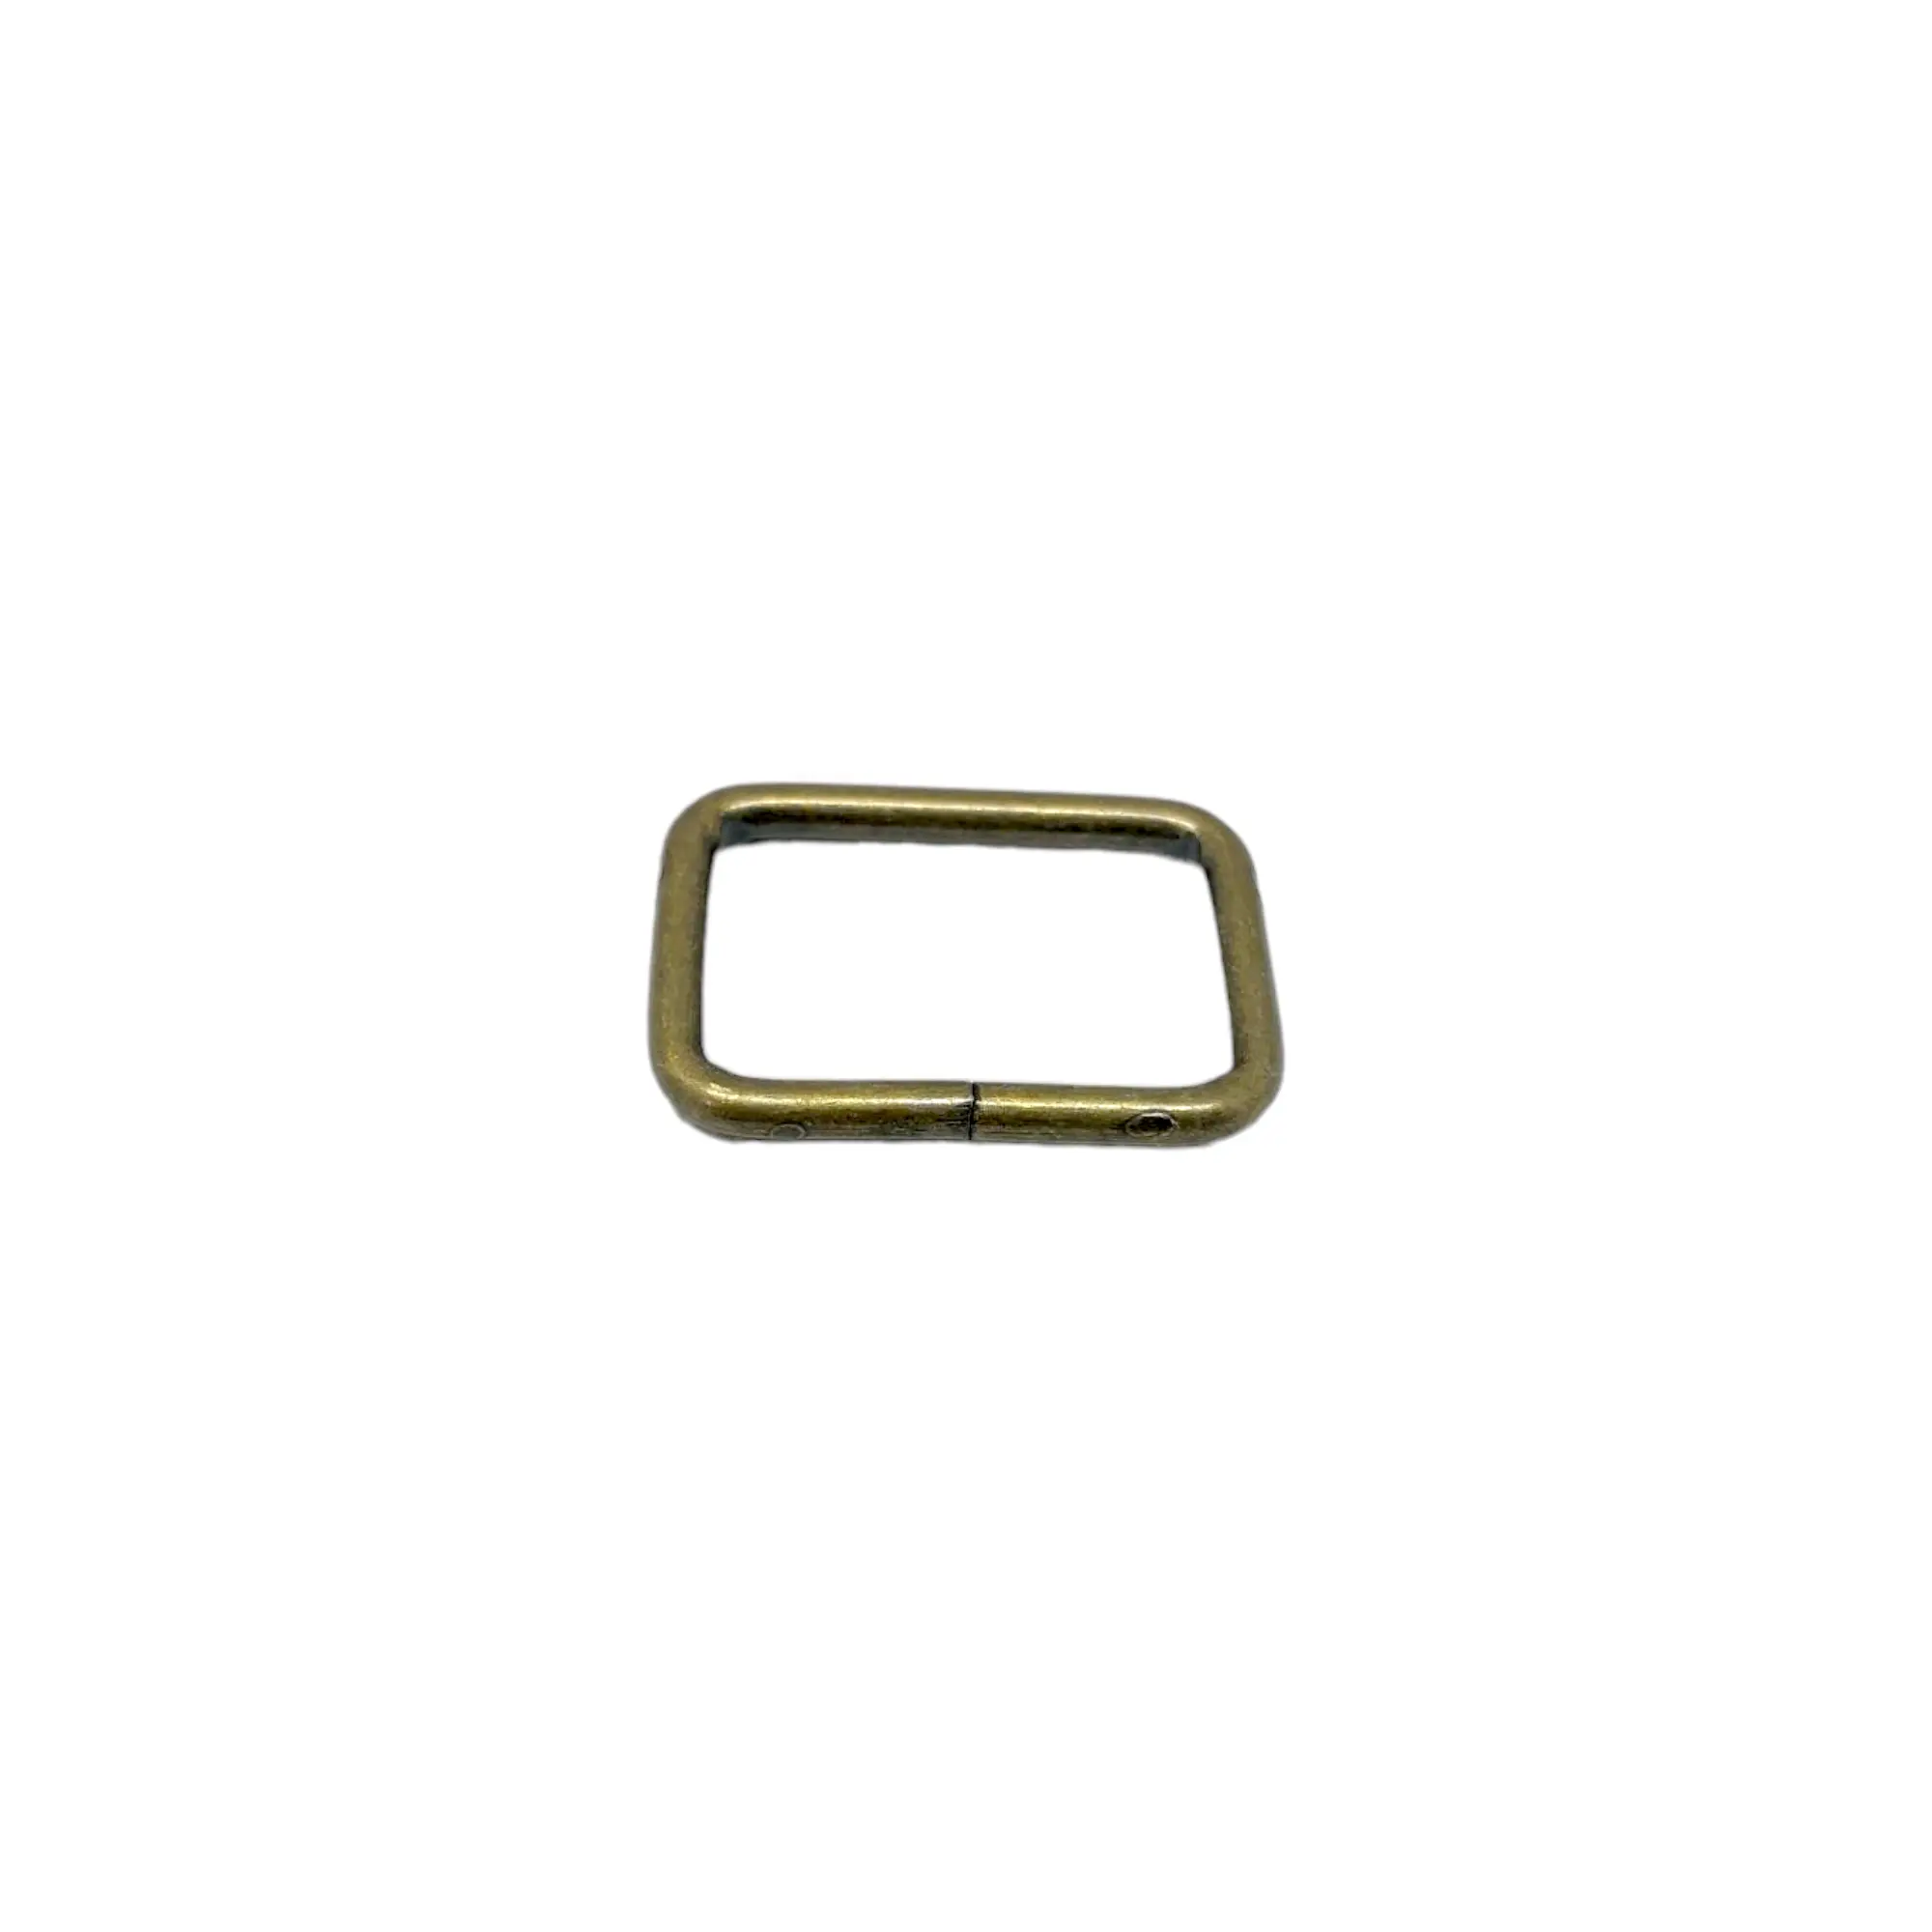 MING KEE 금속 1 인치 25mm 핸드백 가방 금속 액세서리 웨빙 패브릭 스트랩 사용 직사각형 사각 금속 와이어 철 버클 링